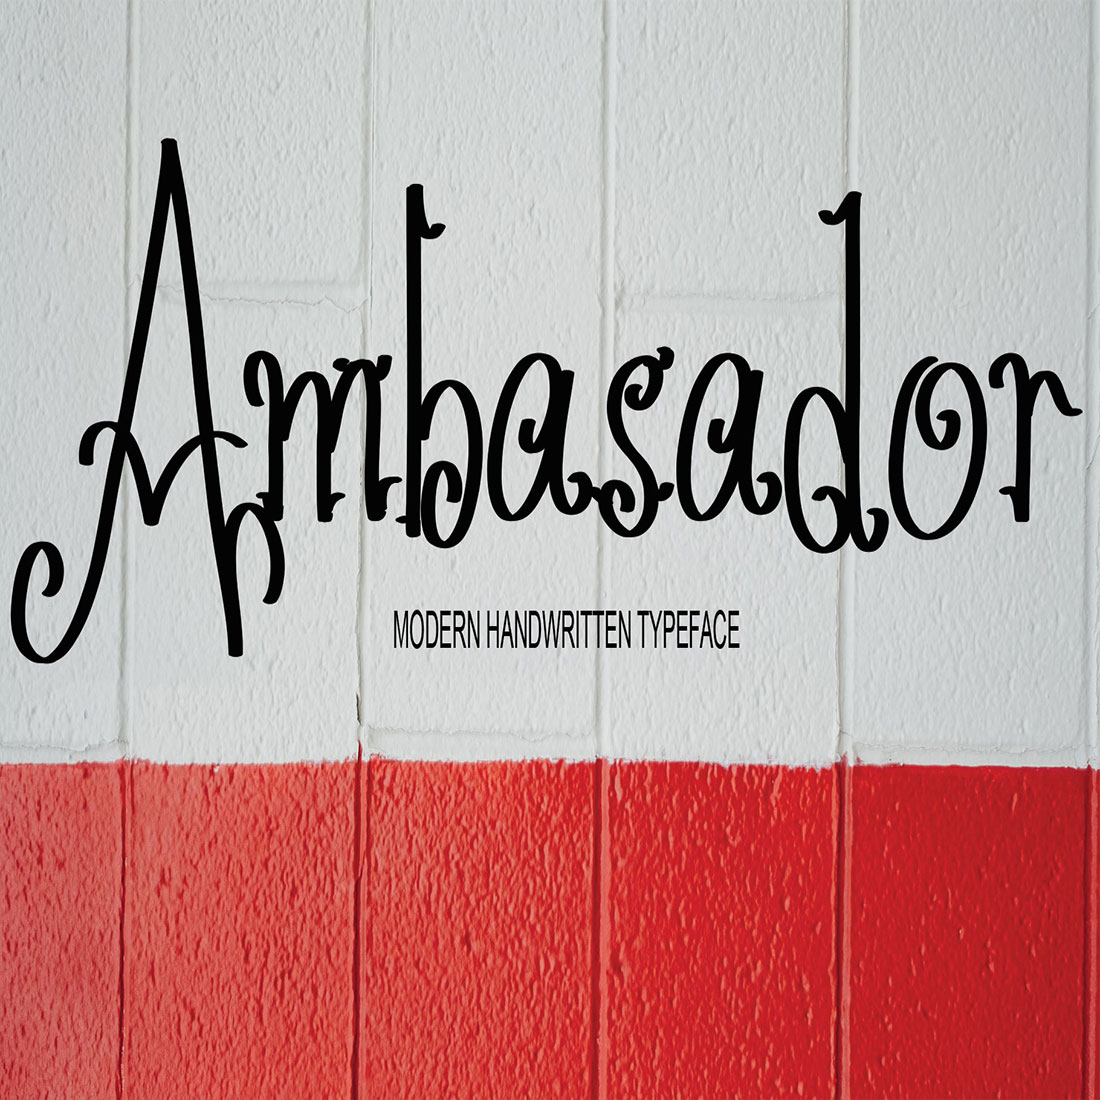 Ambasador Handwriting Sans Serif Font cover image.